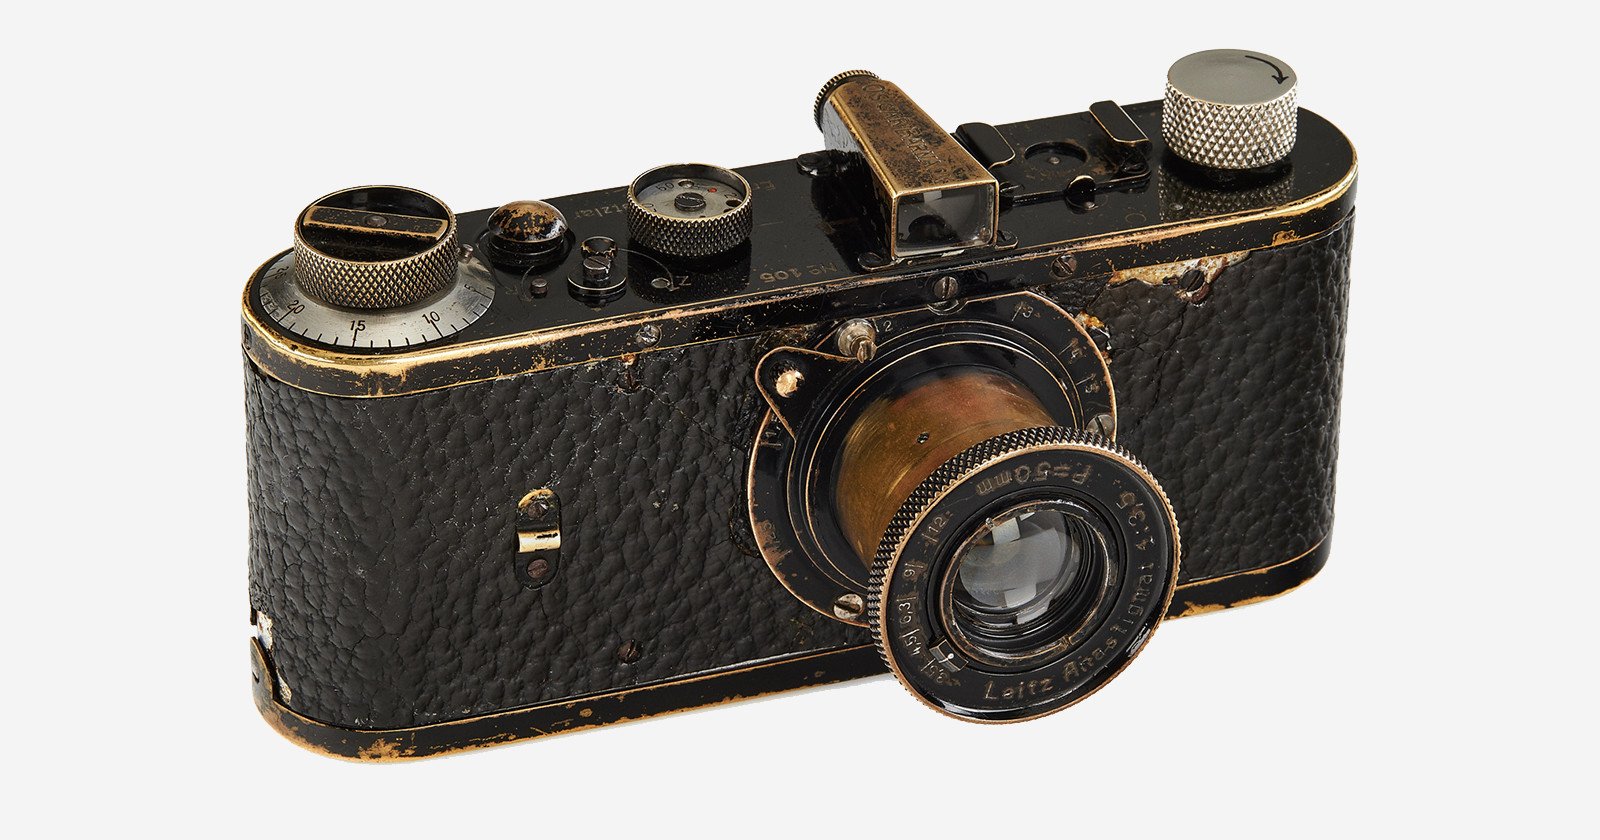 Oskar Barnacks 1923 0-Series Leica May Fetch $3.2M at Auction